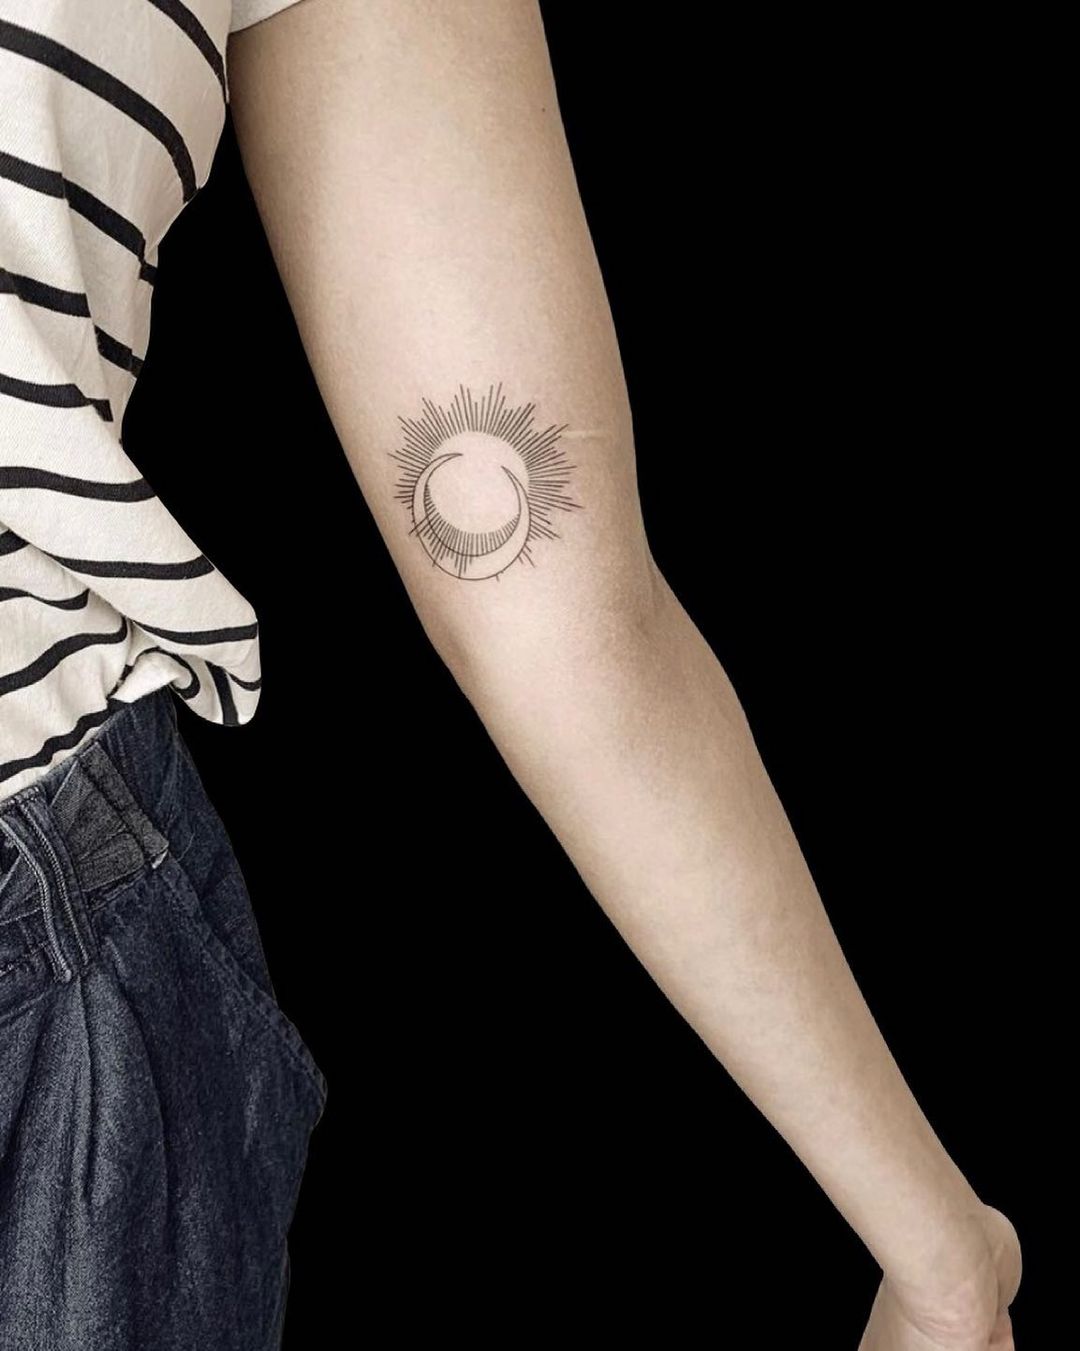 Tatuaje de sol y luna